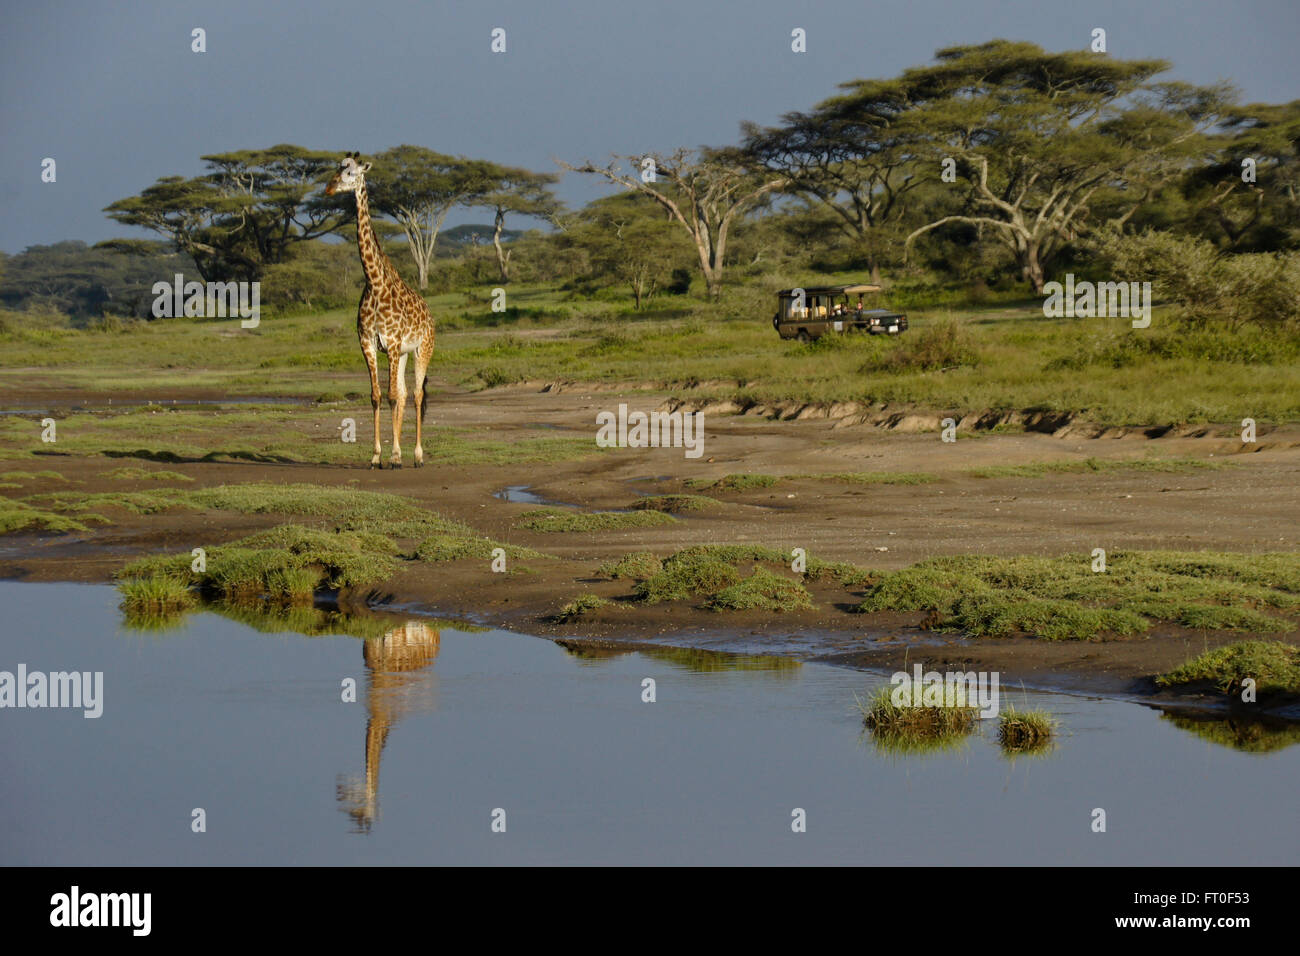 Masai-Giraffe spiegelt sich im Teich mit Safari-Fahrzeug im Hintergrund (Ndutu), Ngorongoro Conservation Area, Tansania Stockfoto